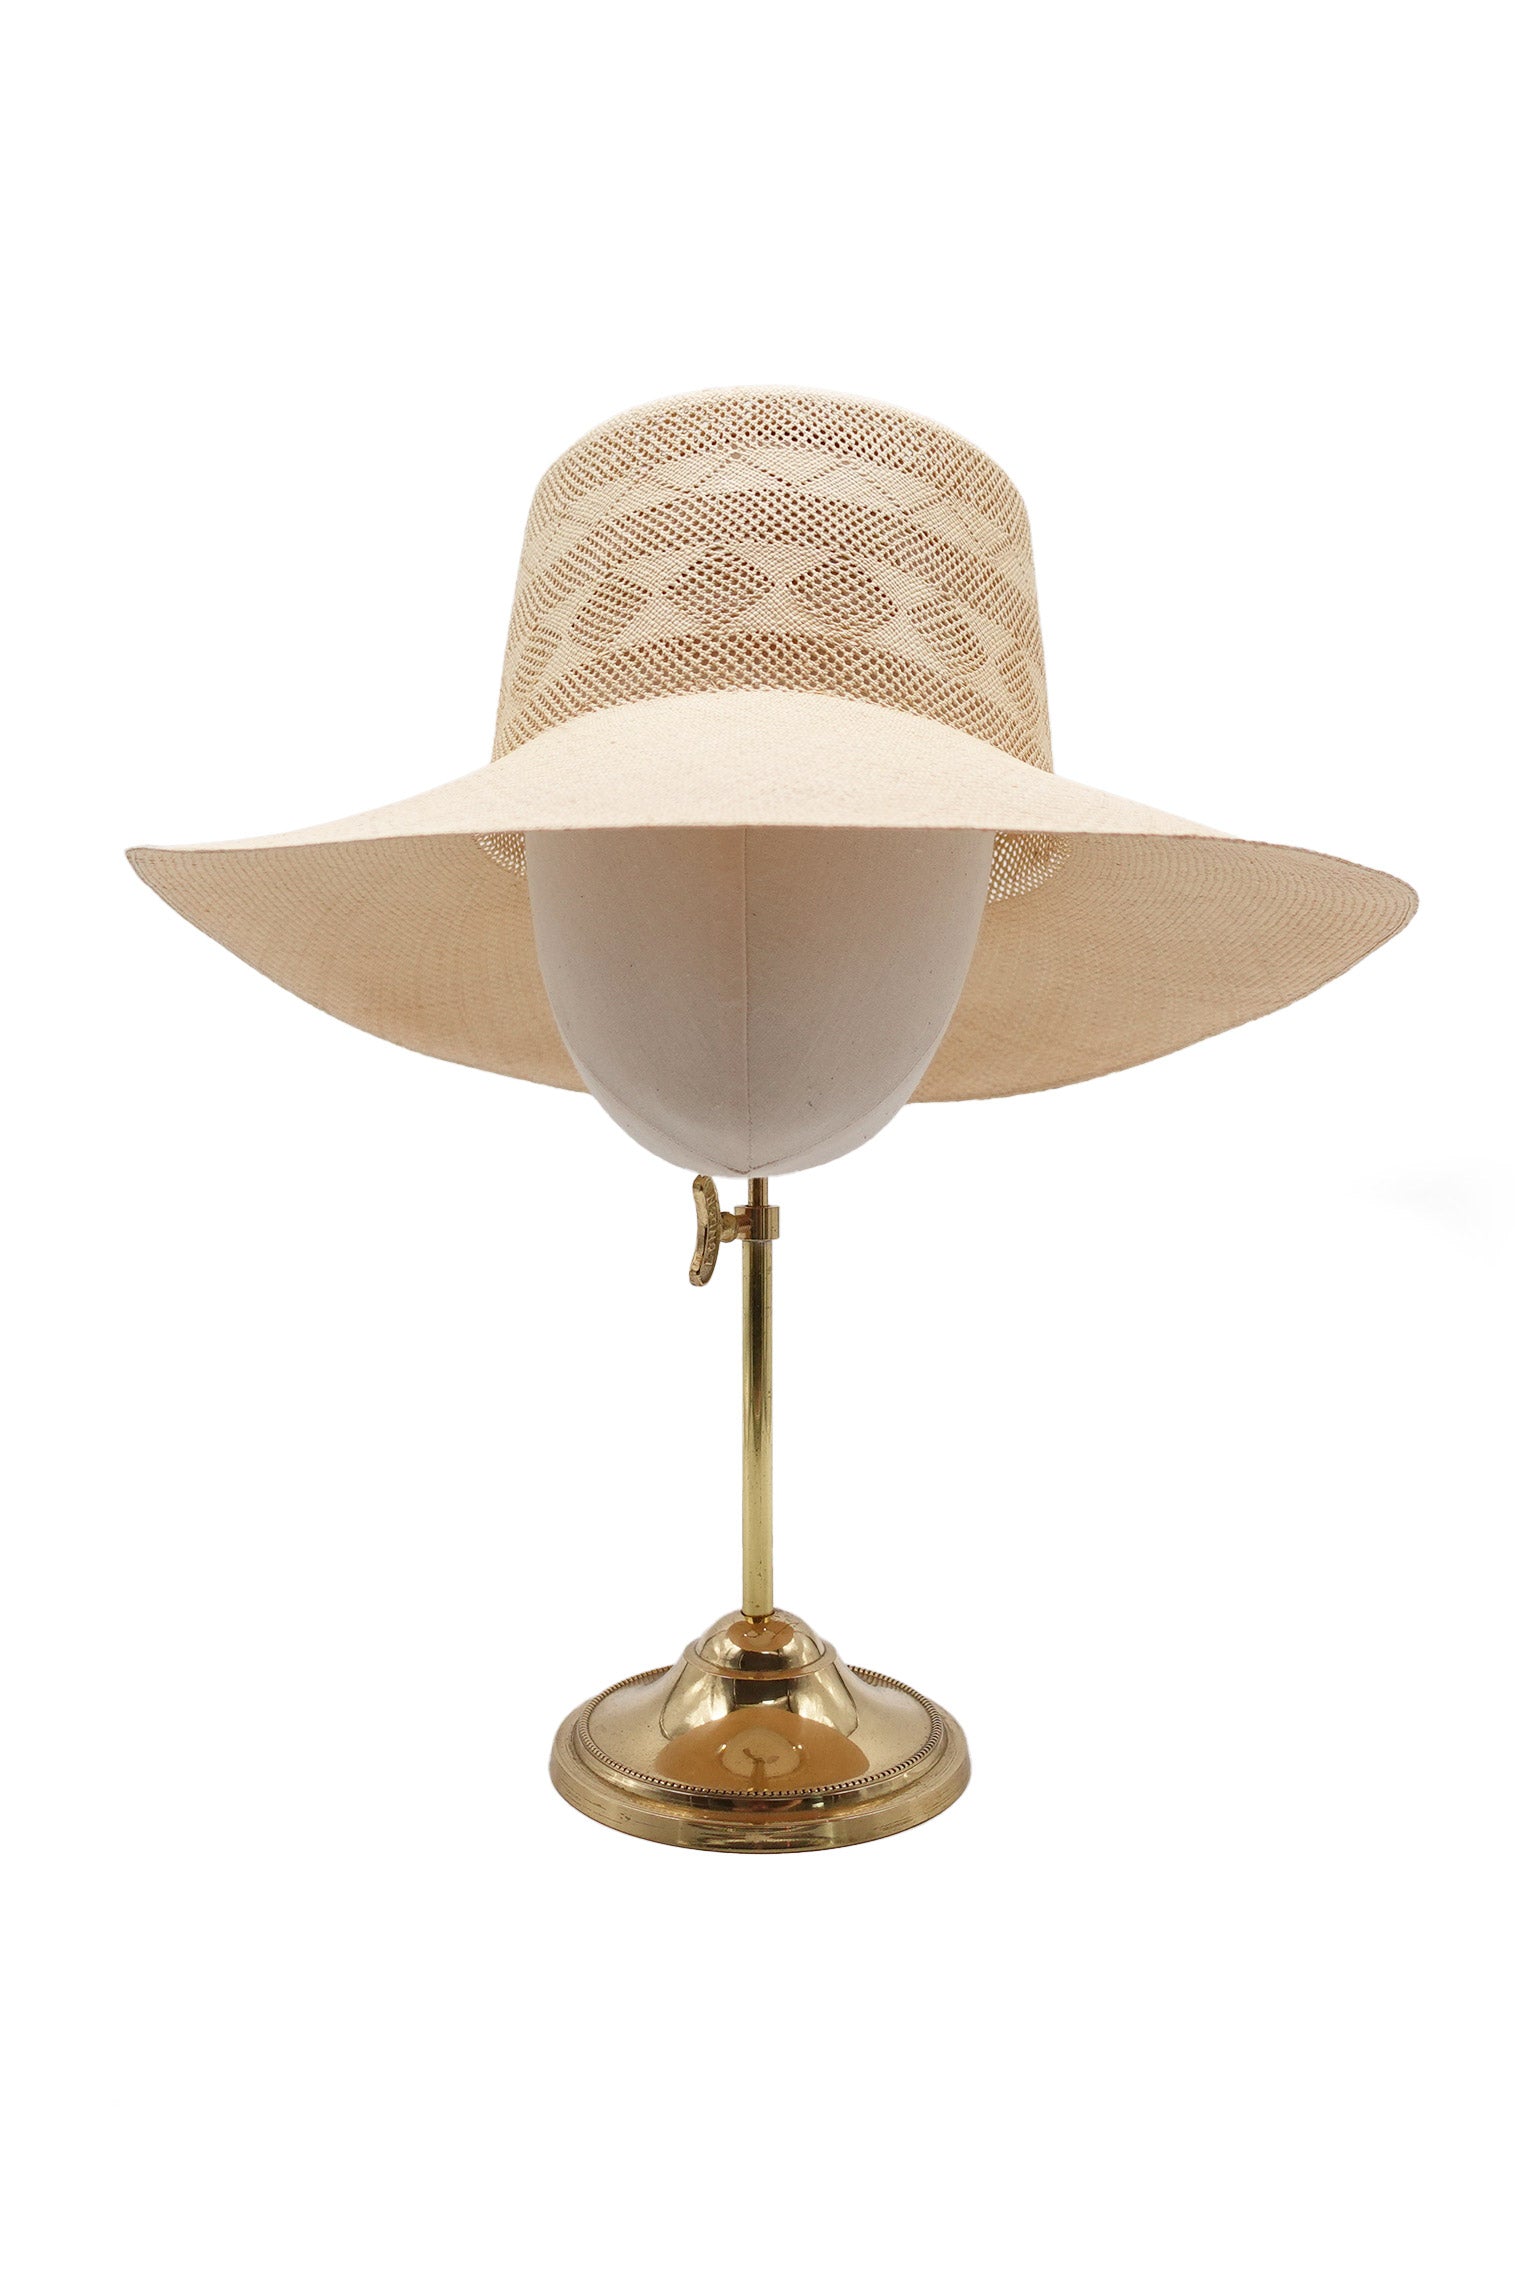 Eva Woven Panama - The Bespoke Embroidered Panama Hat Collection - Lock & Co. Hatters London UK